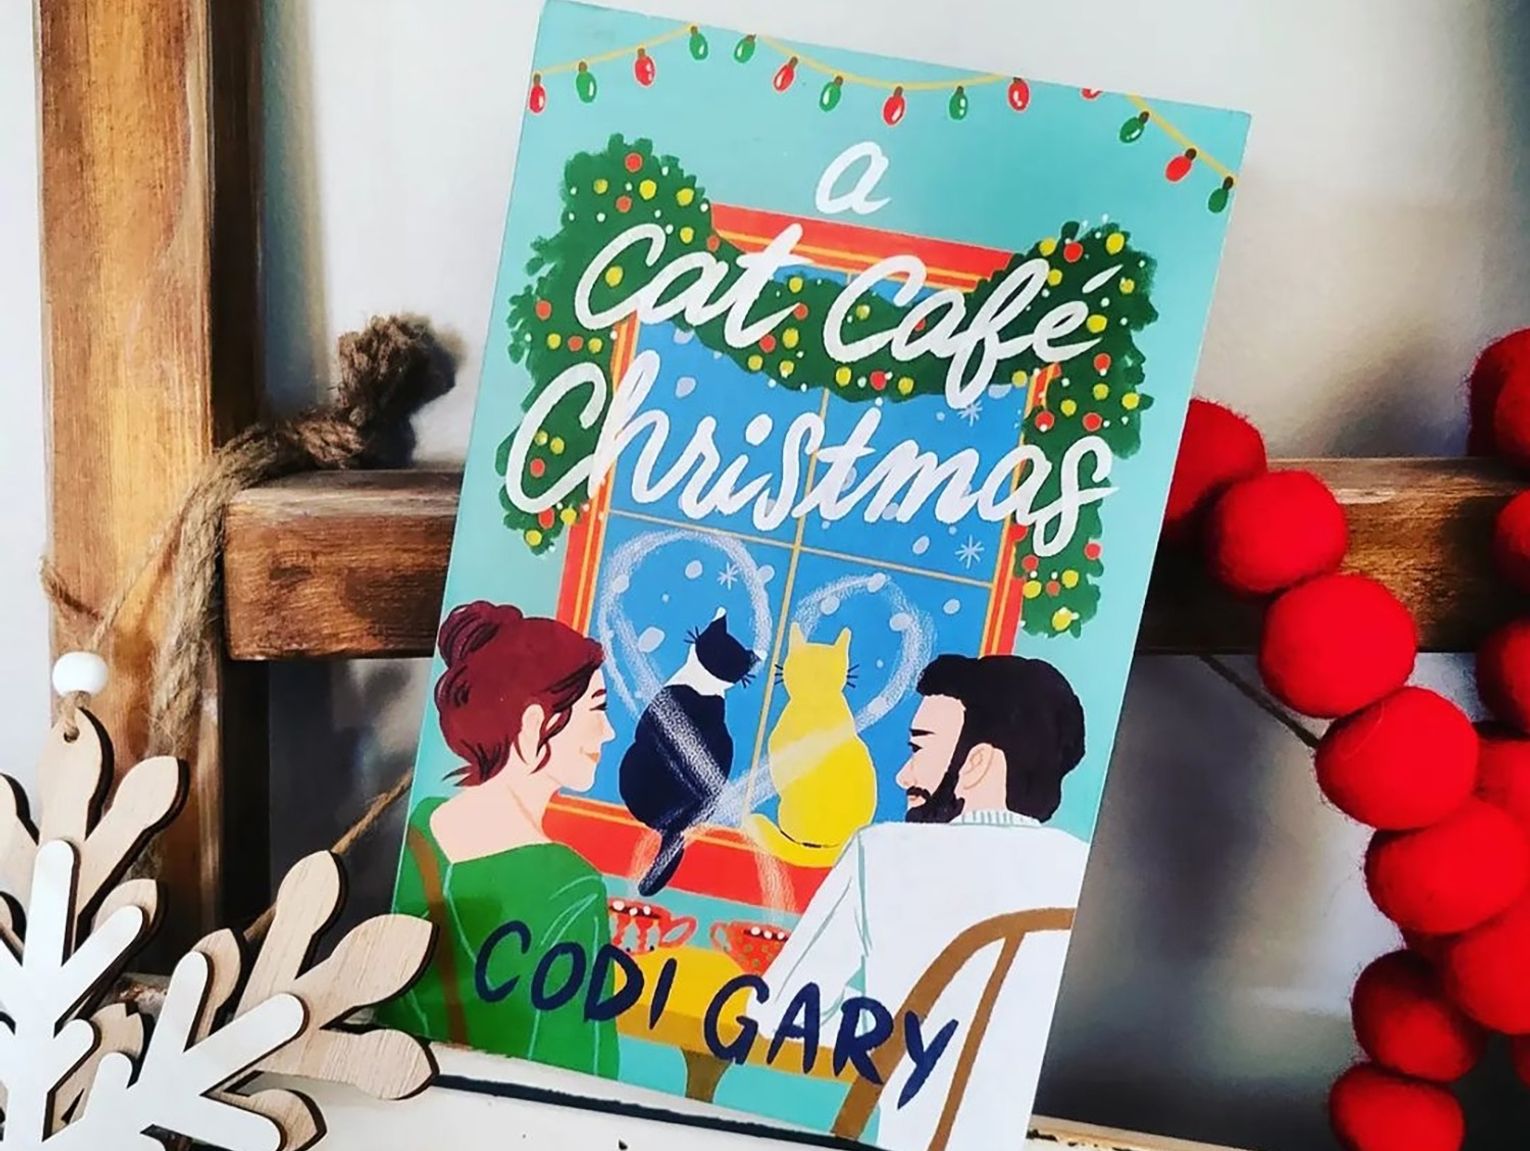 A Cat Café Christmas by Codi Gary